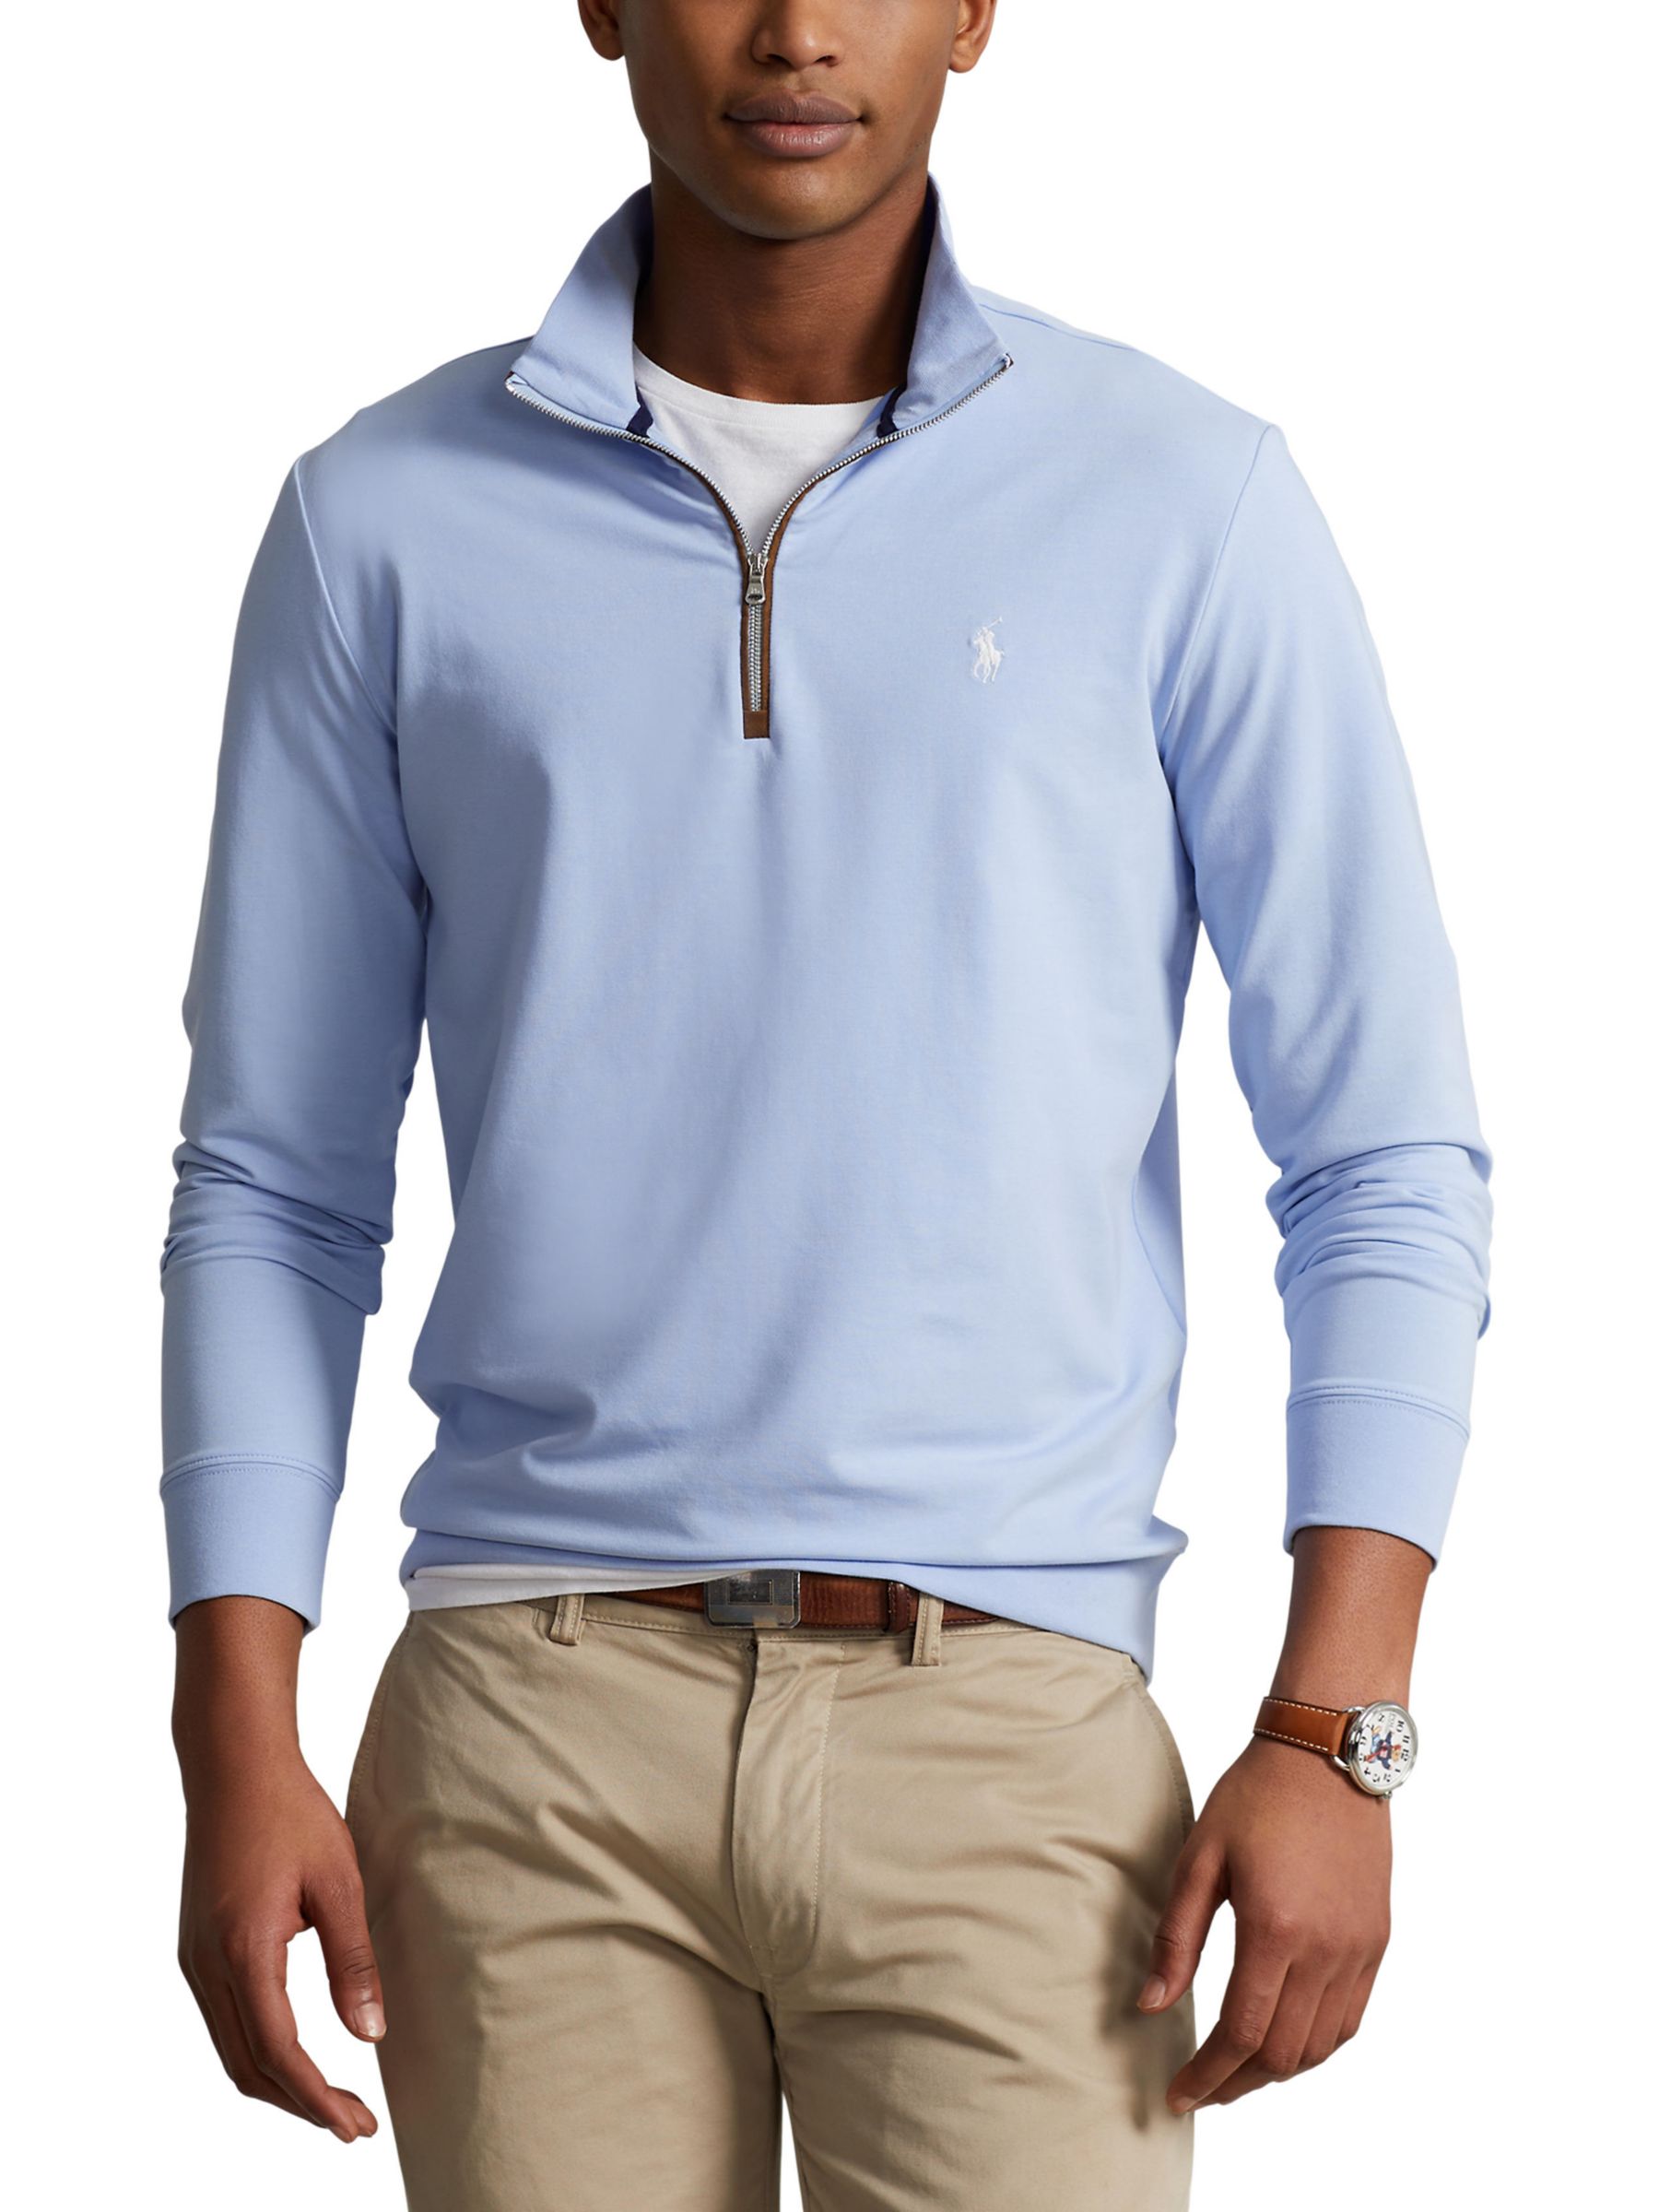 Polo Ralph Lauren Long Sleeve Zip Golf Jersey Top, Elite Blue, L